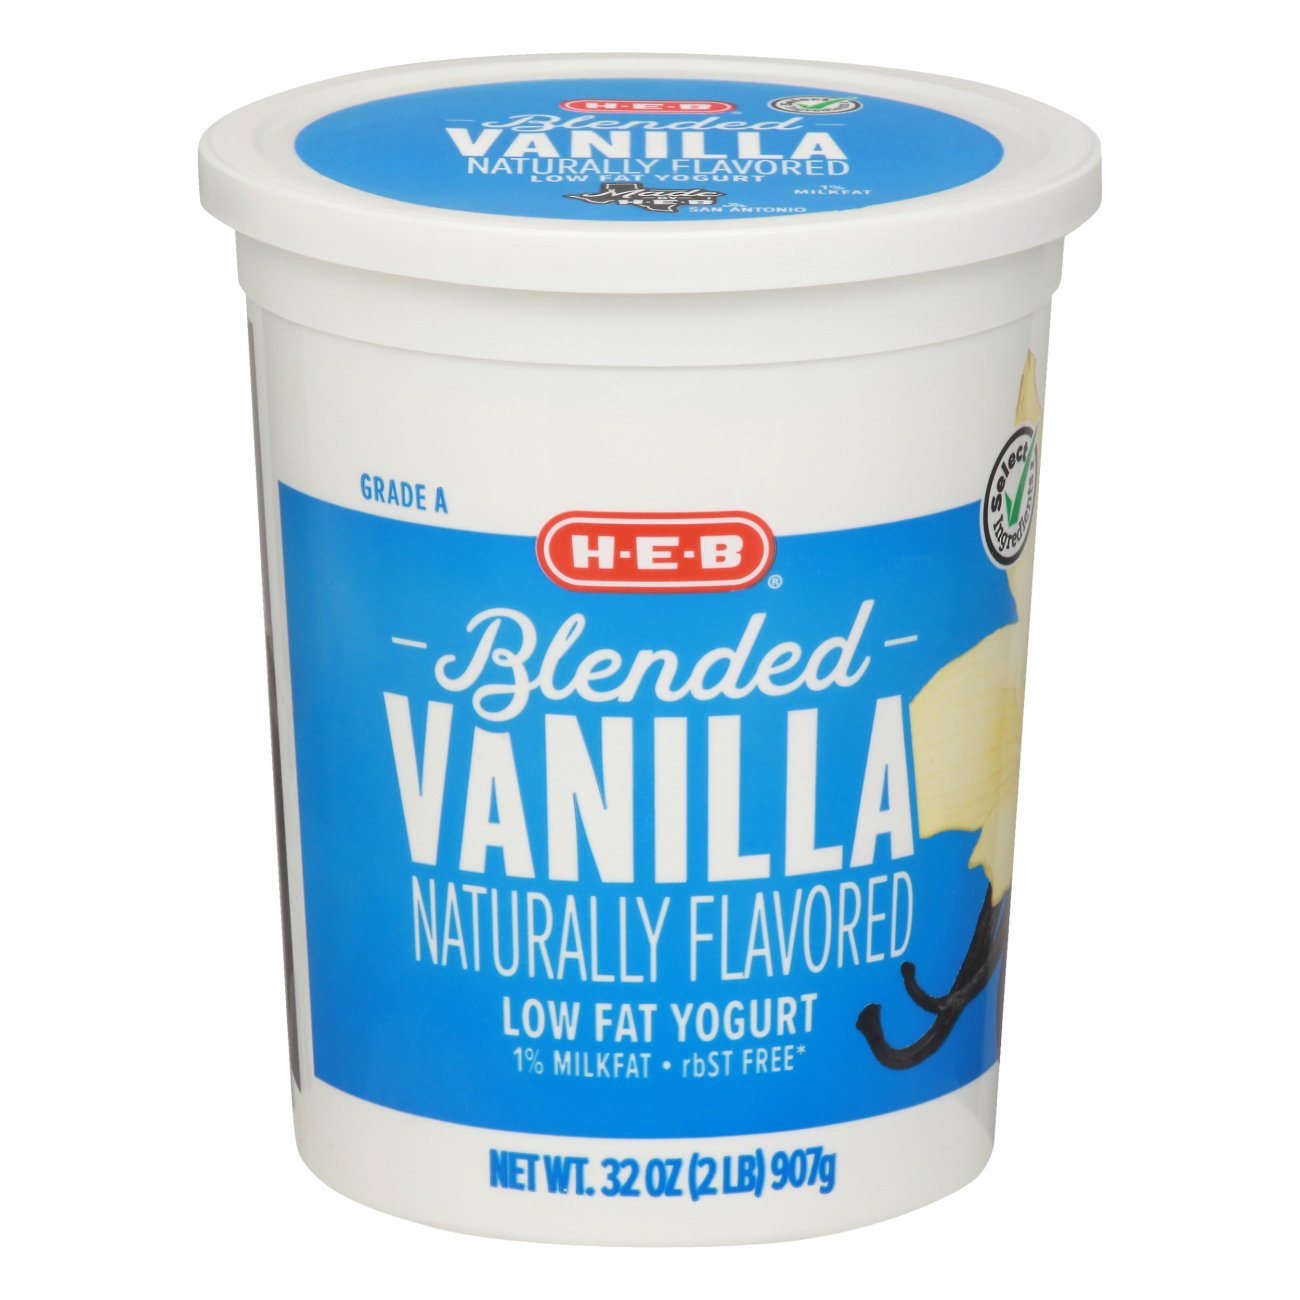 Dannon Yogurt, Low Fat, Vanilla